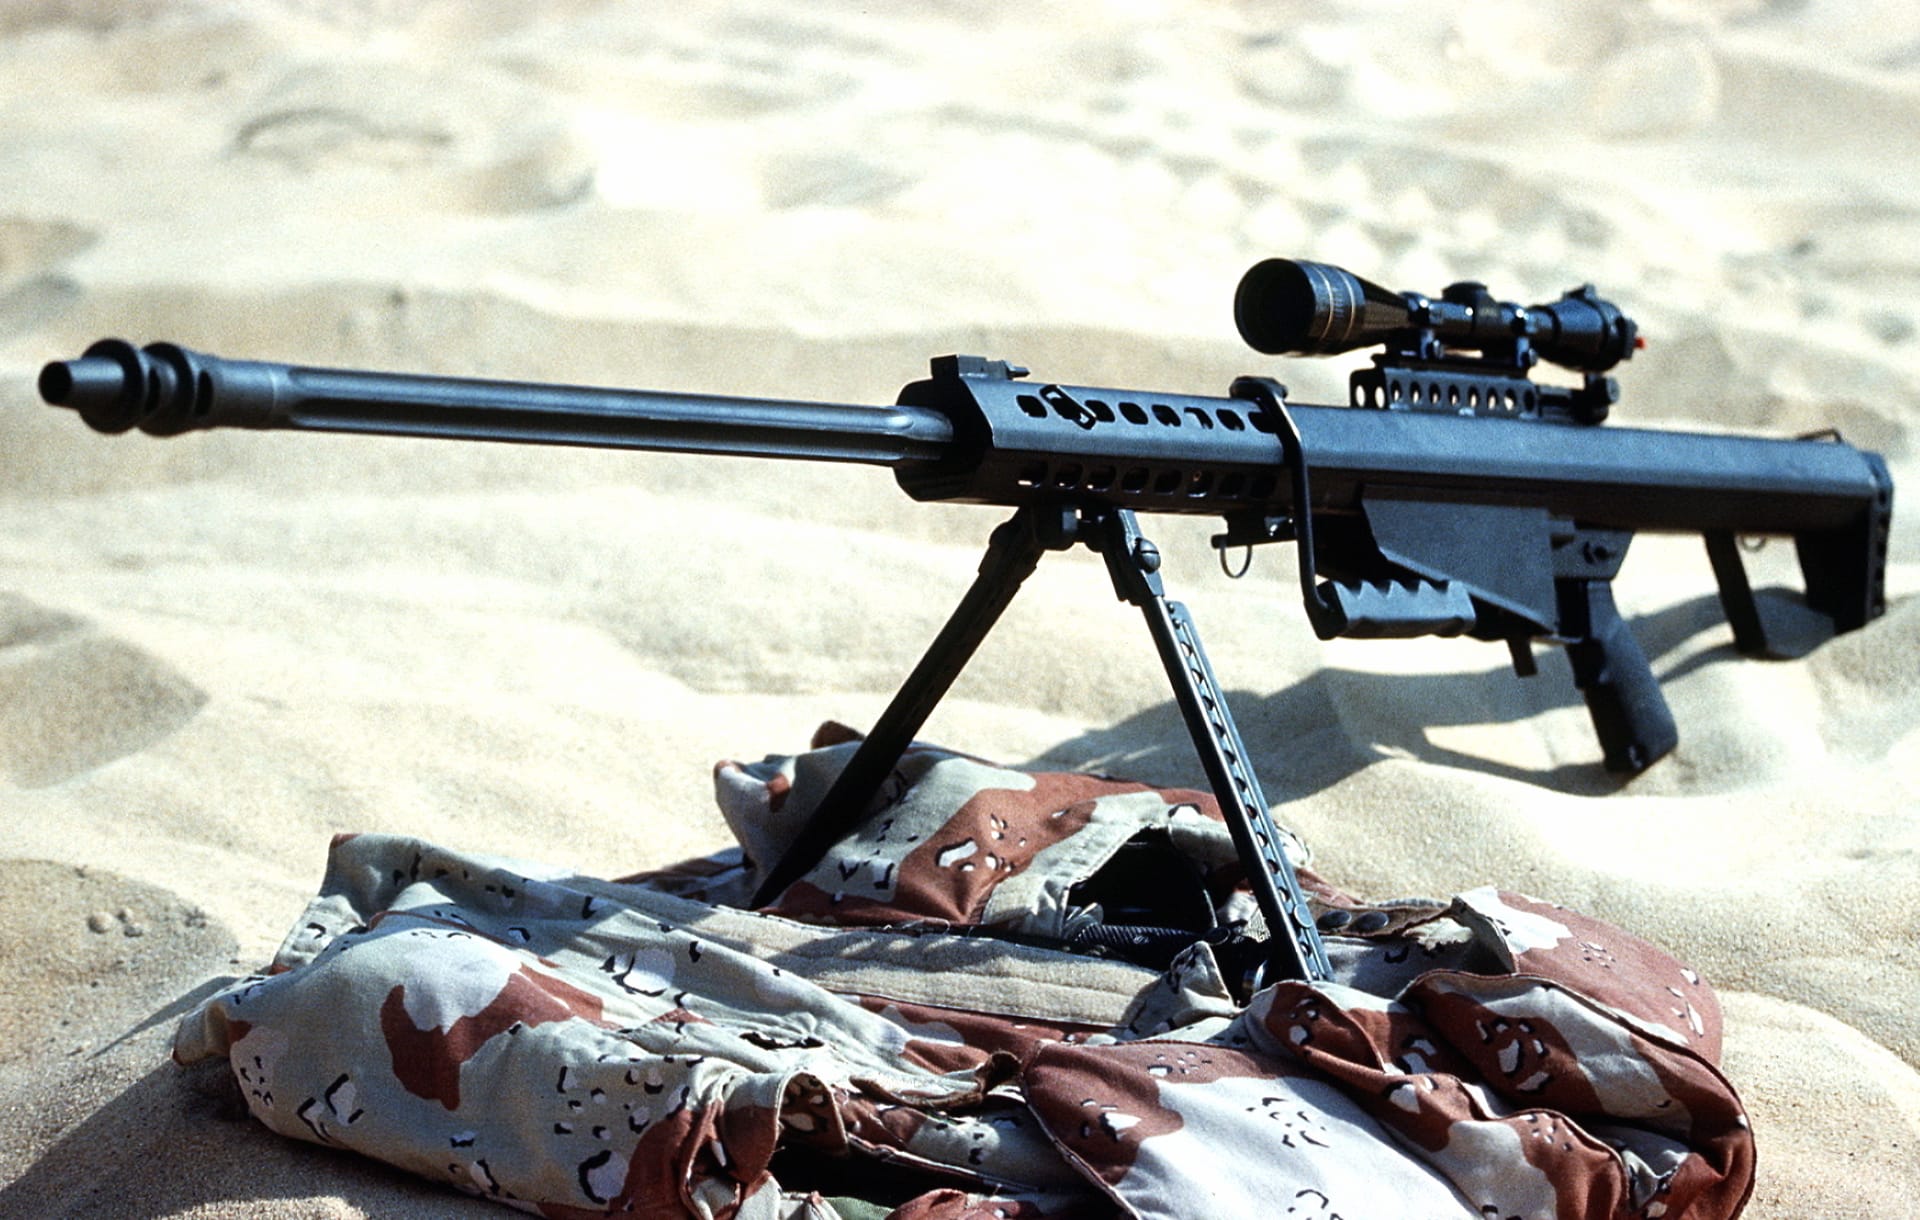 Barrett M82 Sniper Rifle at 320 x 480 iPhone size wallpapers HD quality